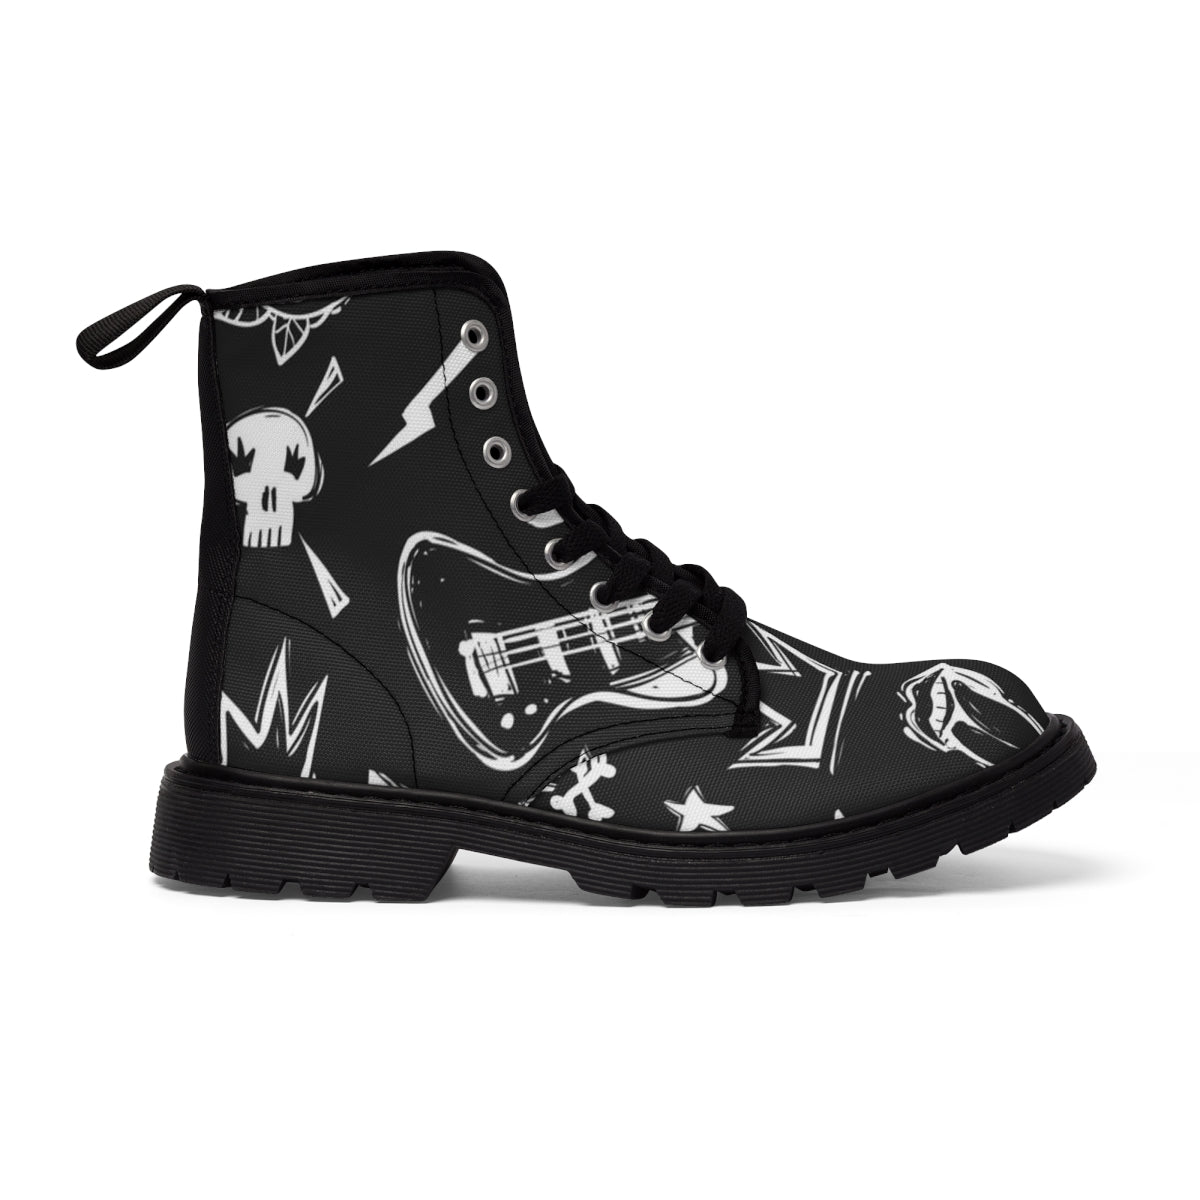 S3X n Rock n Roll - Men's Canvas Boots